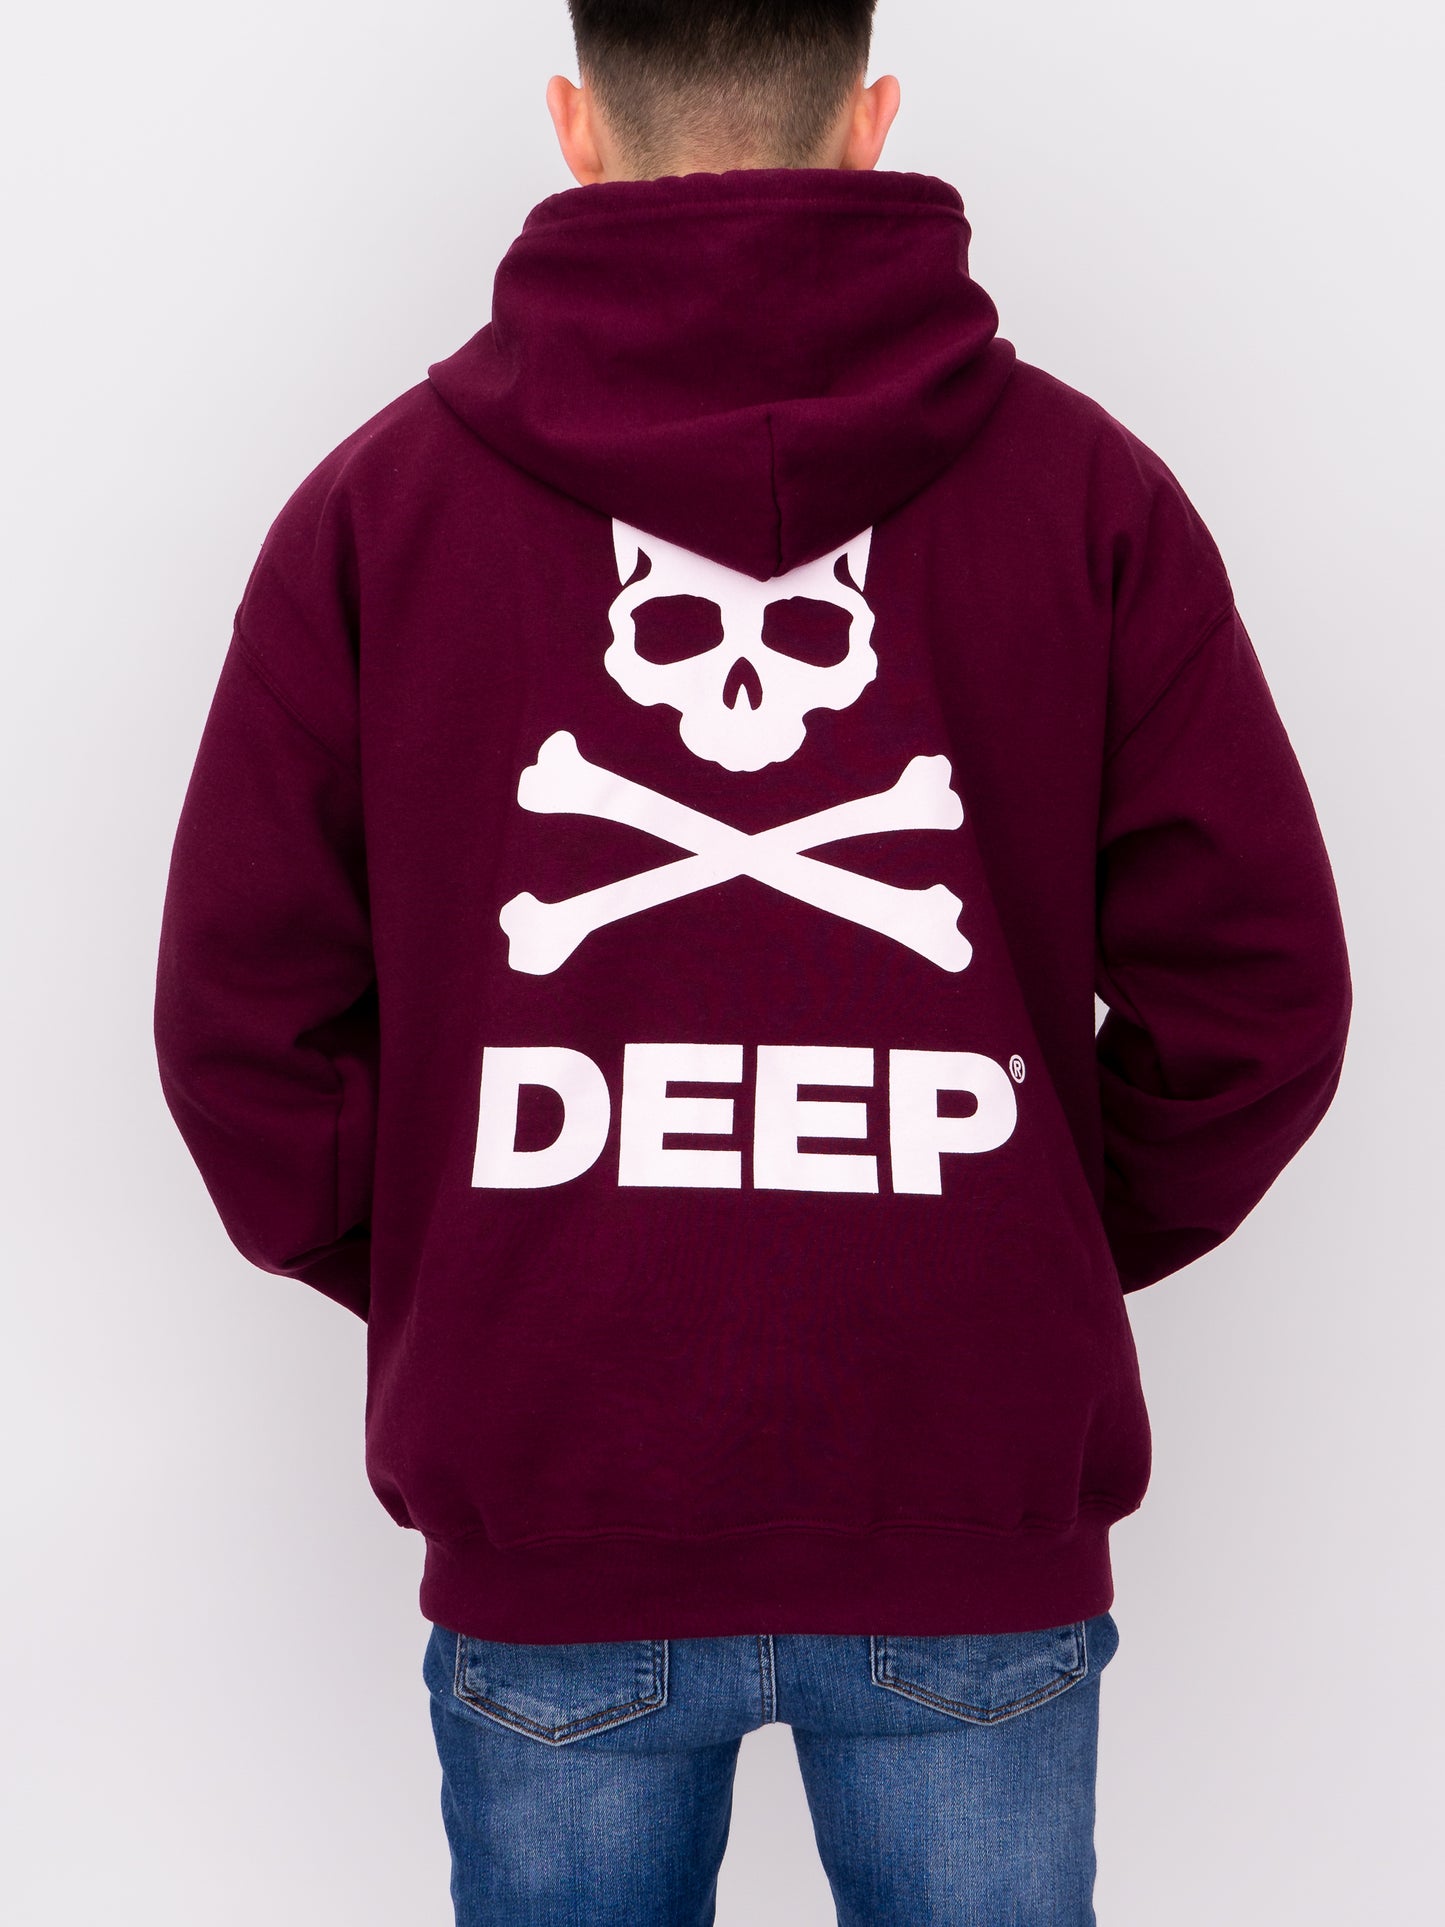 Crossbones Hooded Sweatshirt (Zip) - Maroon - DEEP Clothing